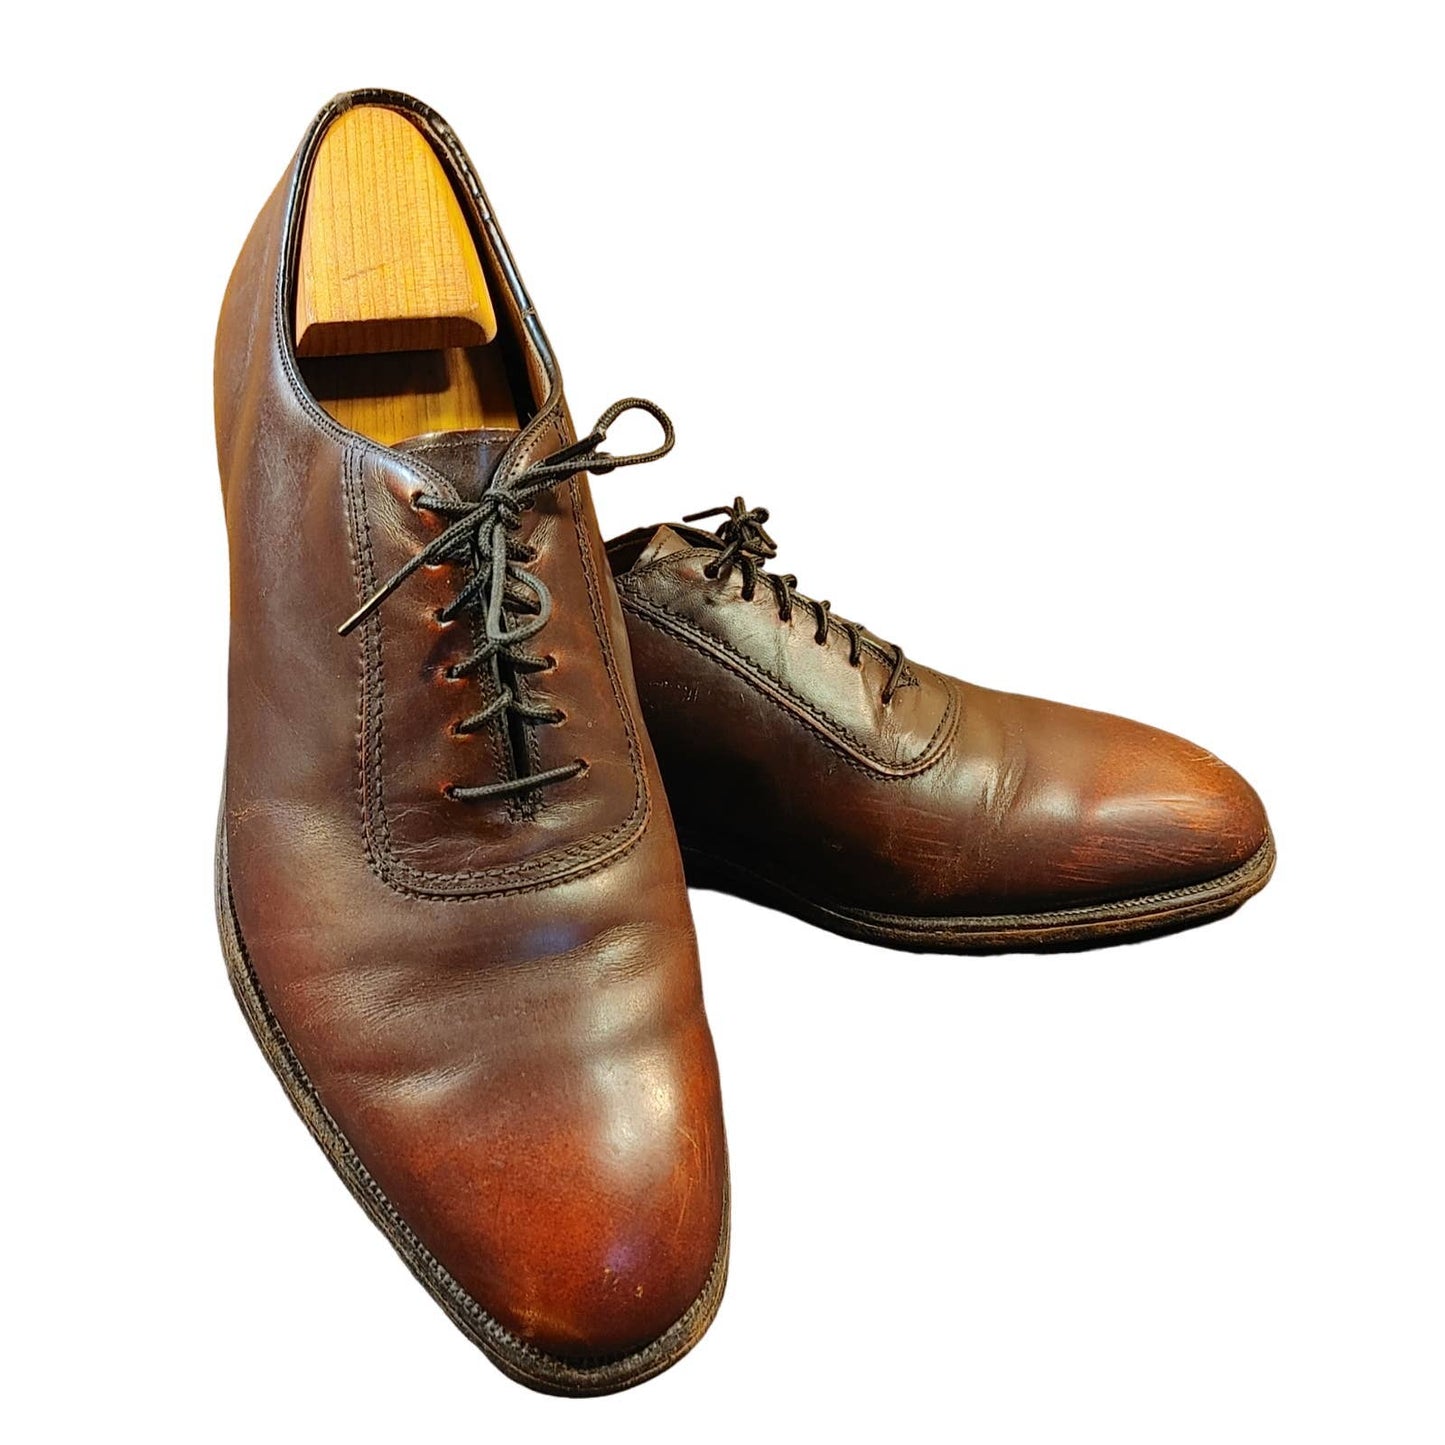 President's pair! Johnston & Murphy Blucher Brown Shoes 10.5 D? Free shipping!